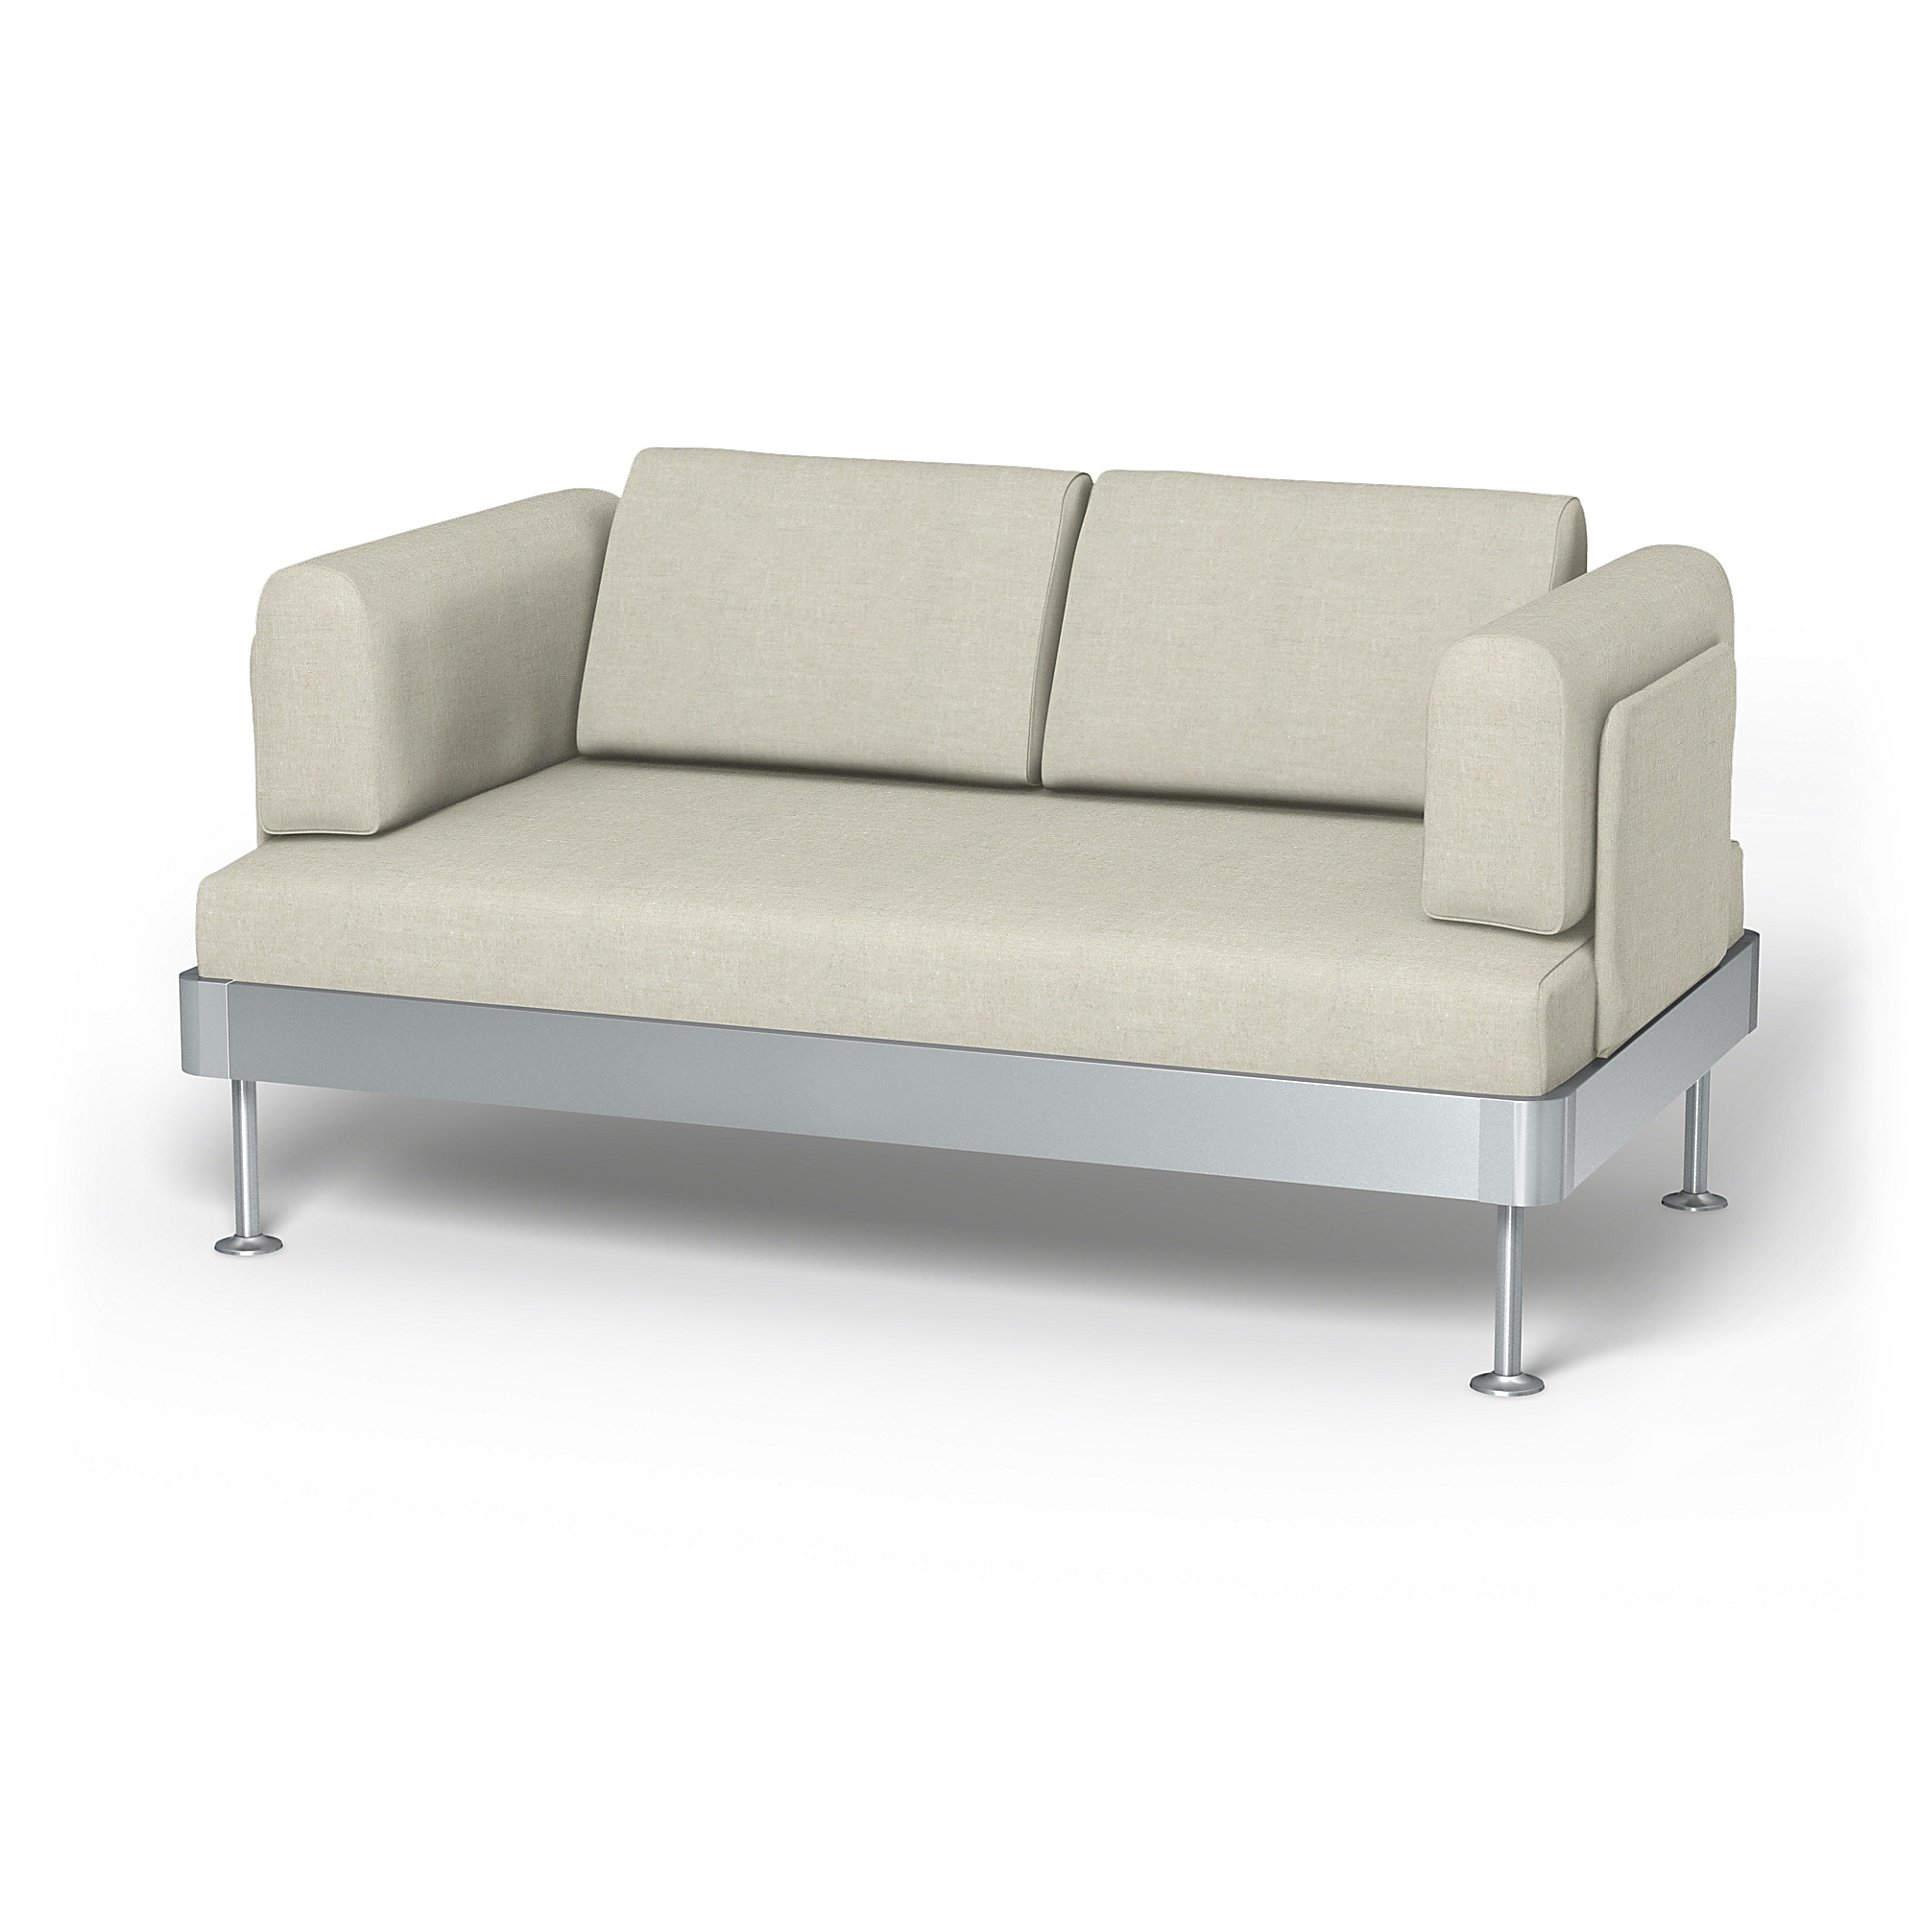 IKEA - Delaktig 2 Seater Sofa Cover, Natural, Linen - Bemz